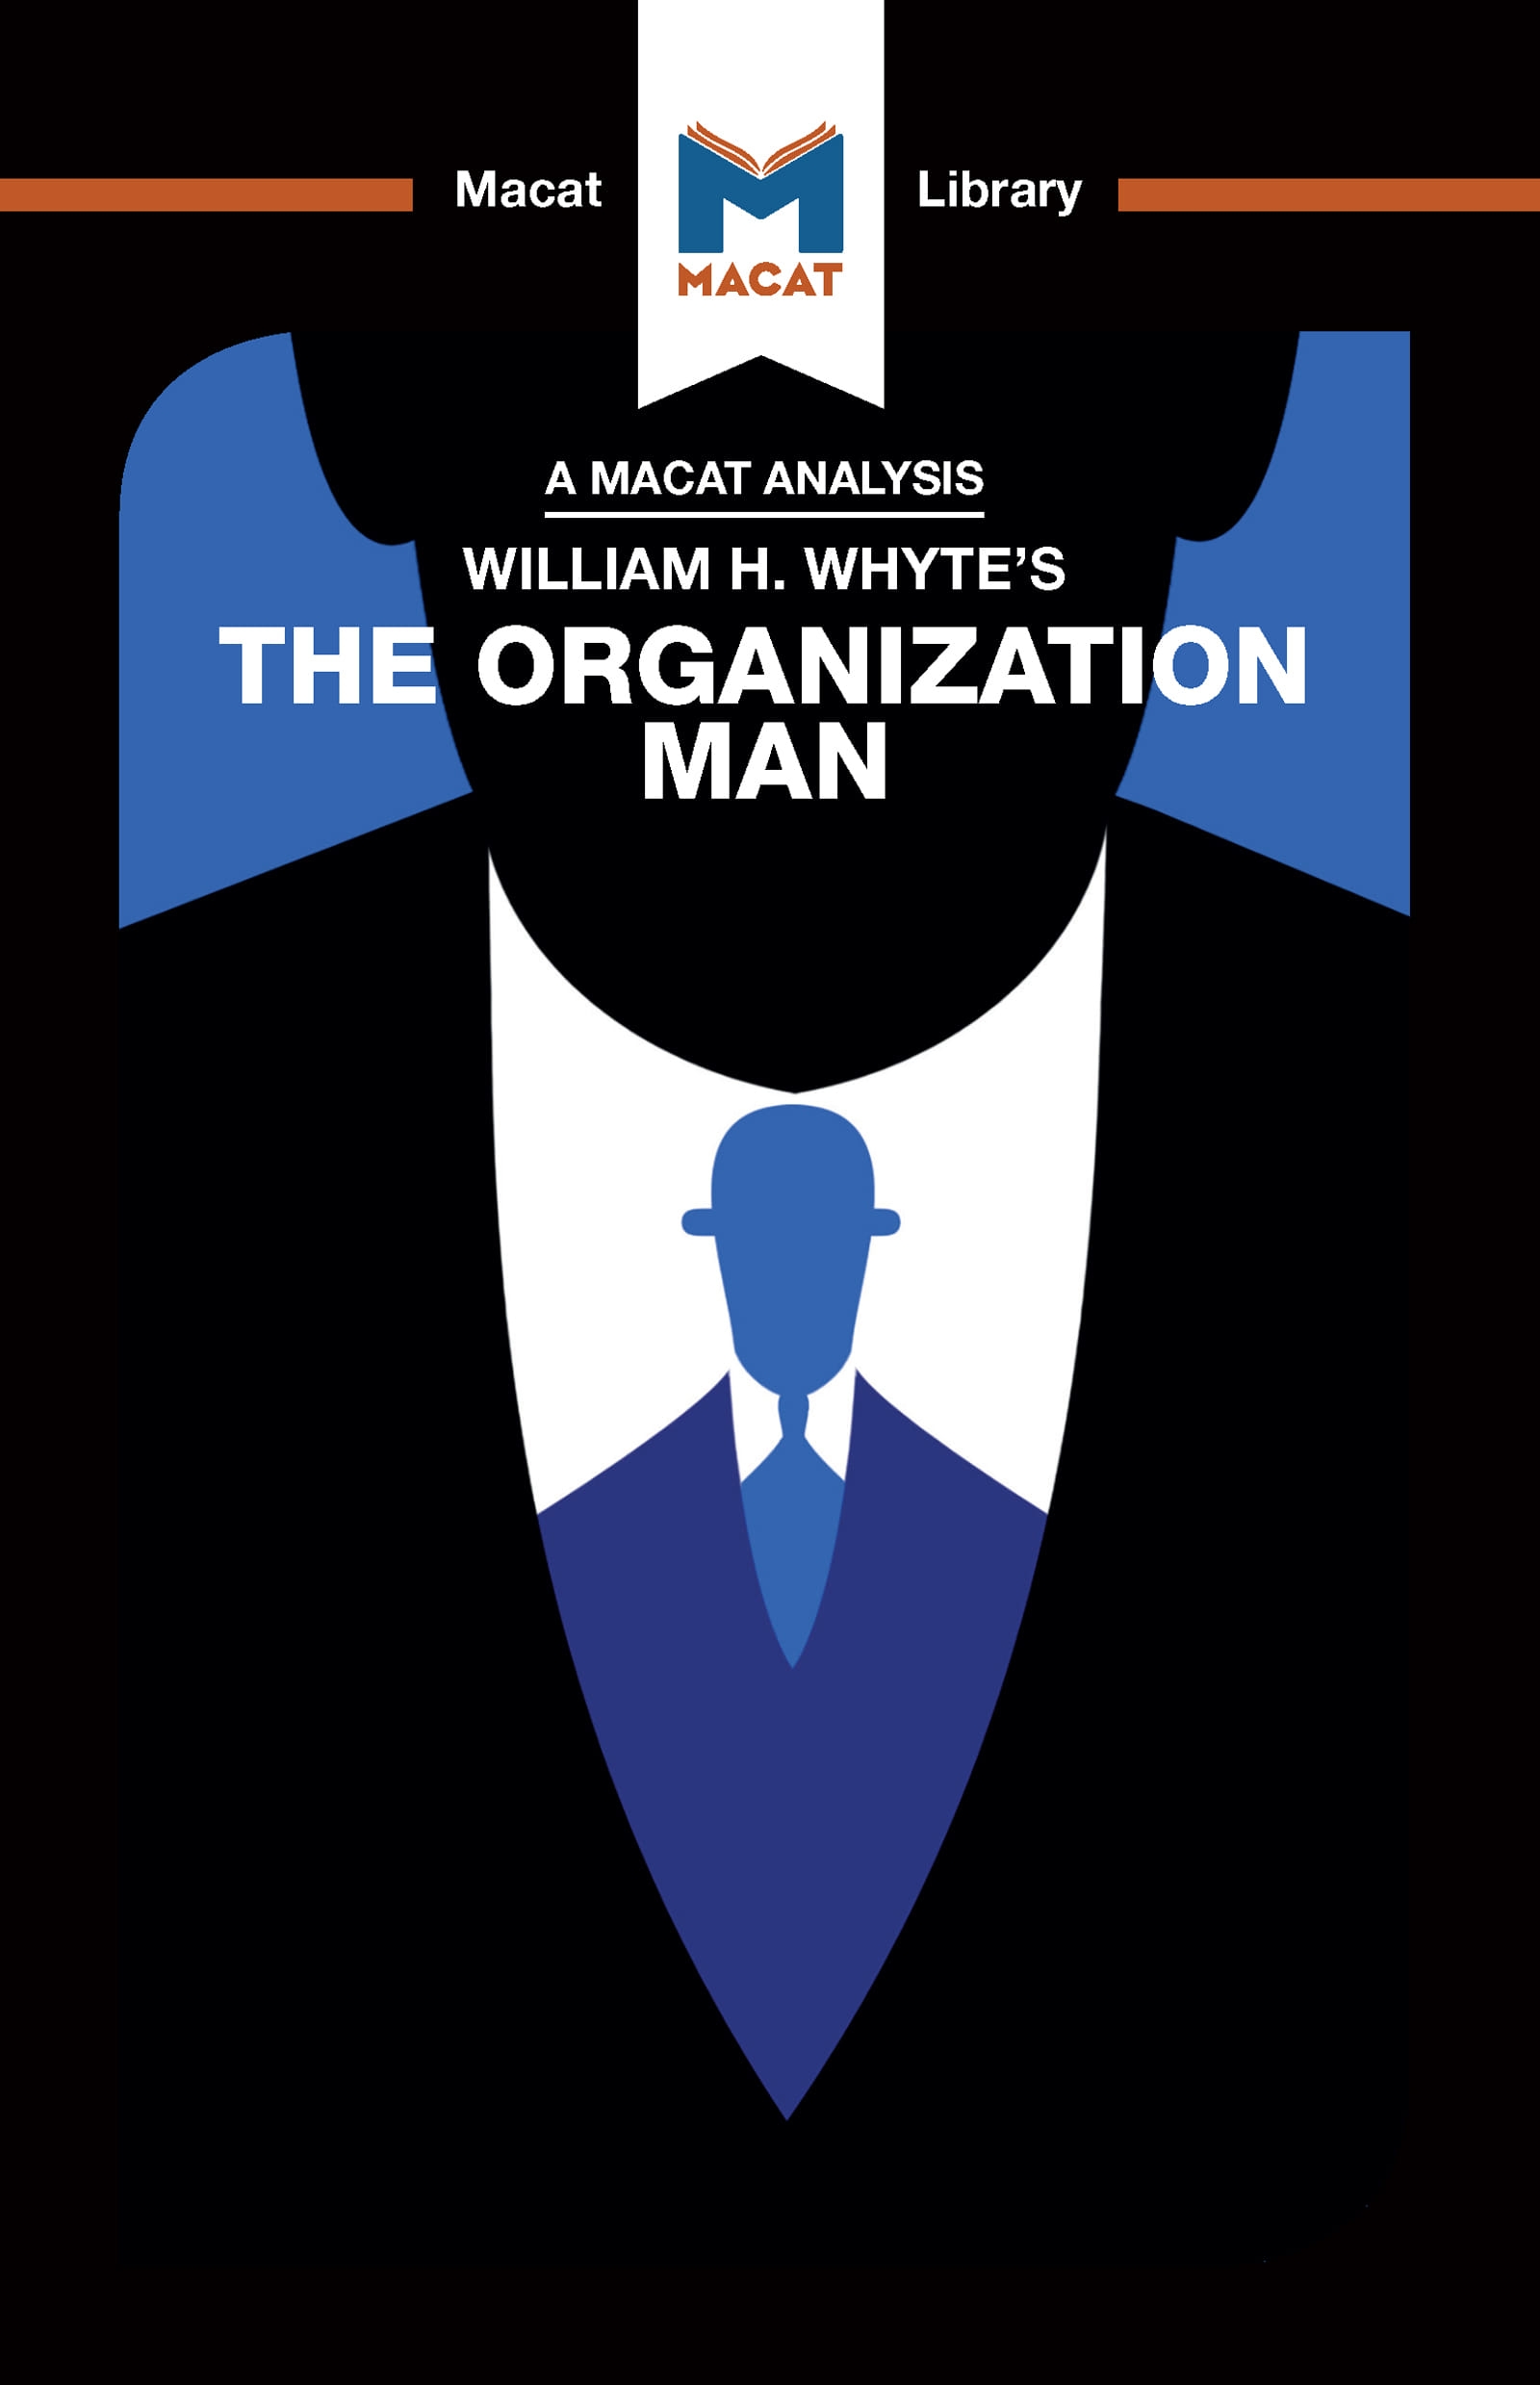 William H. Whyte’s The Organization Man